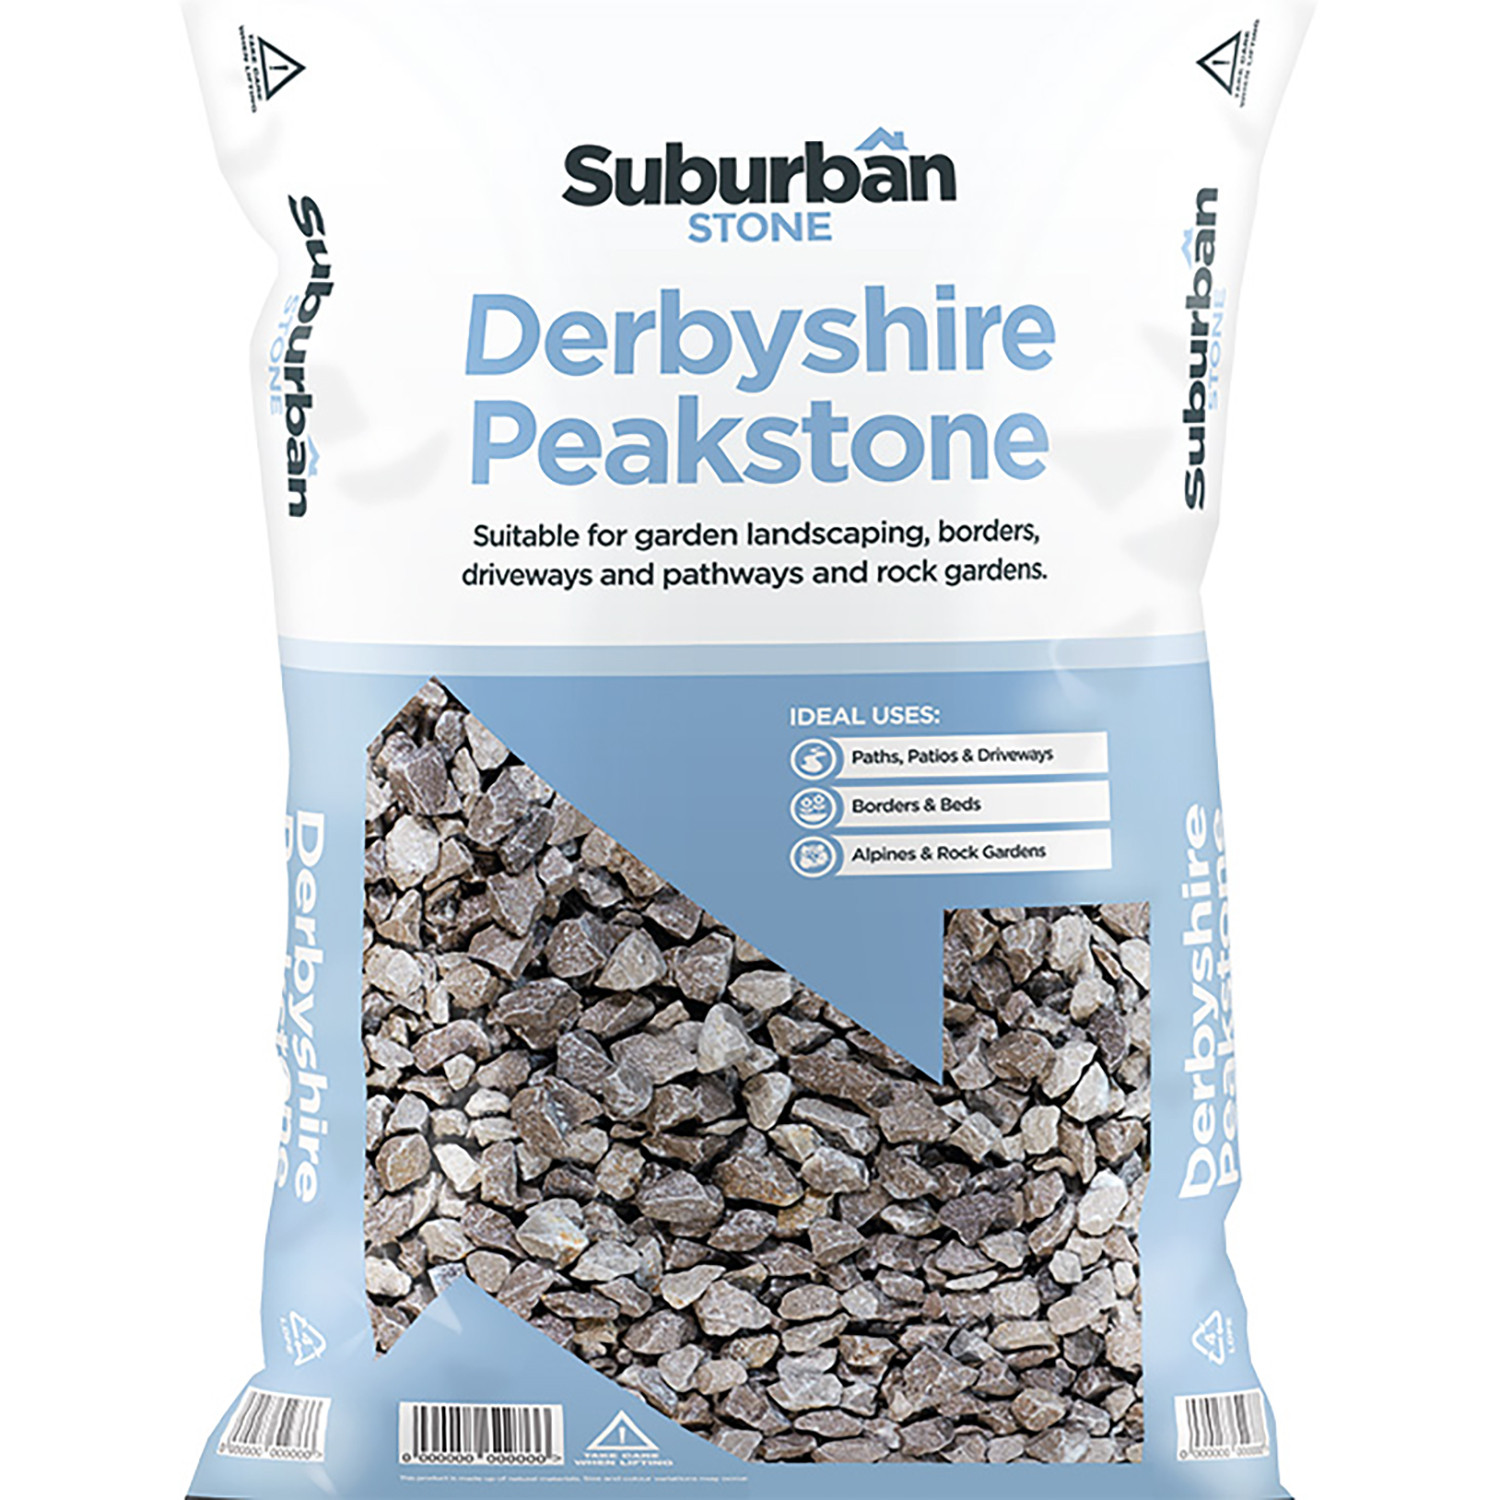 Suburban Stone Derbyshire Peakstone Chippings 20kg Image